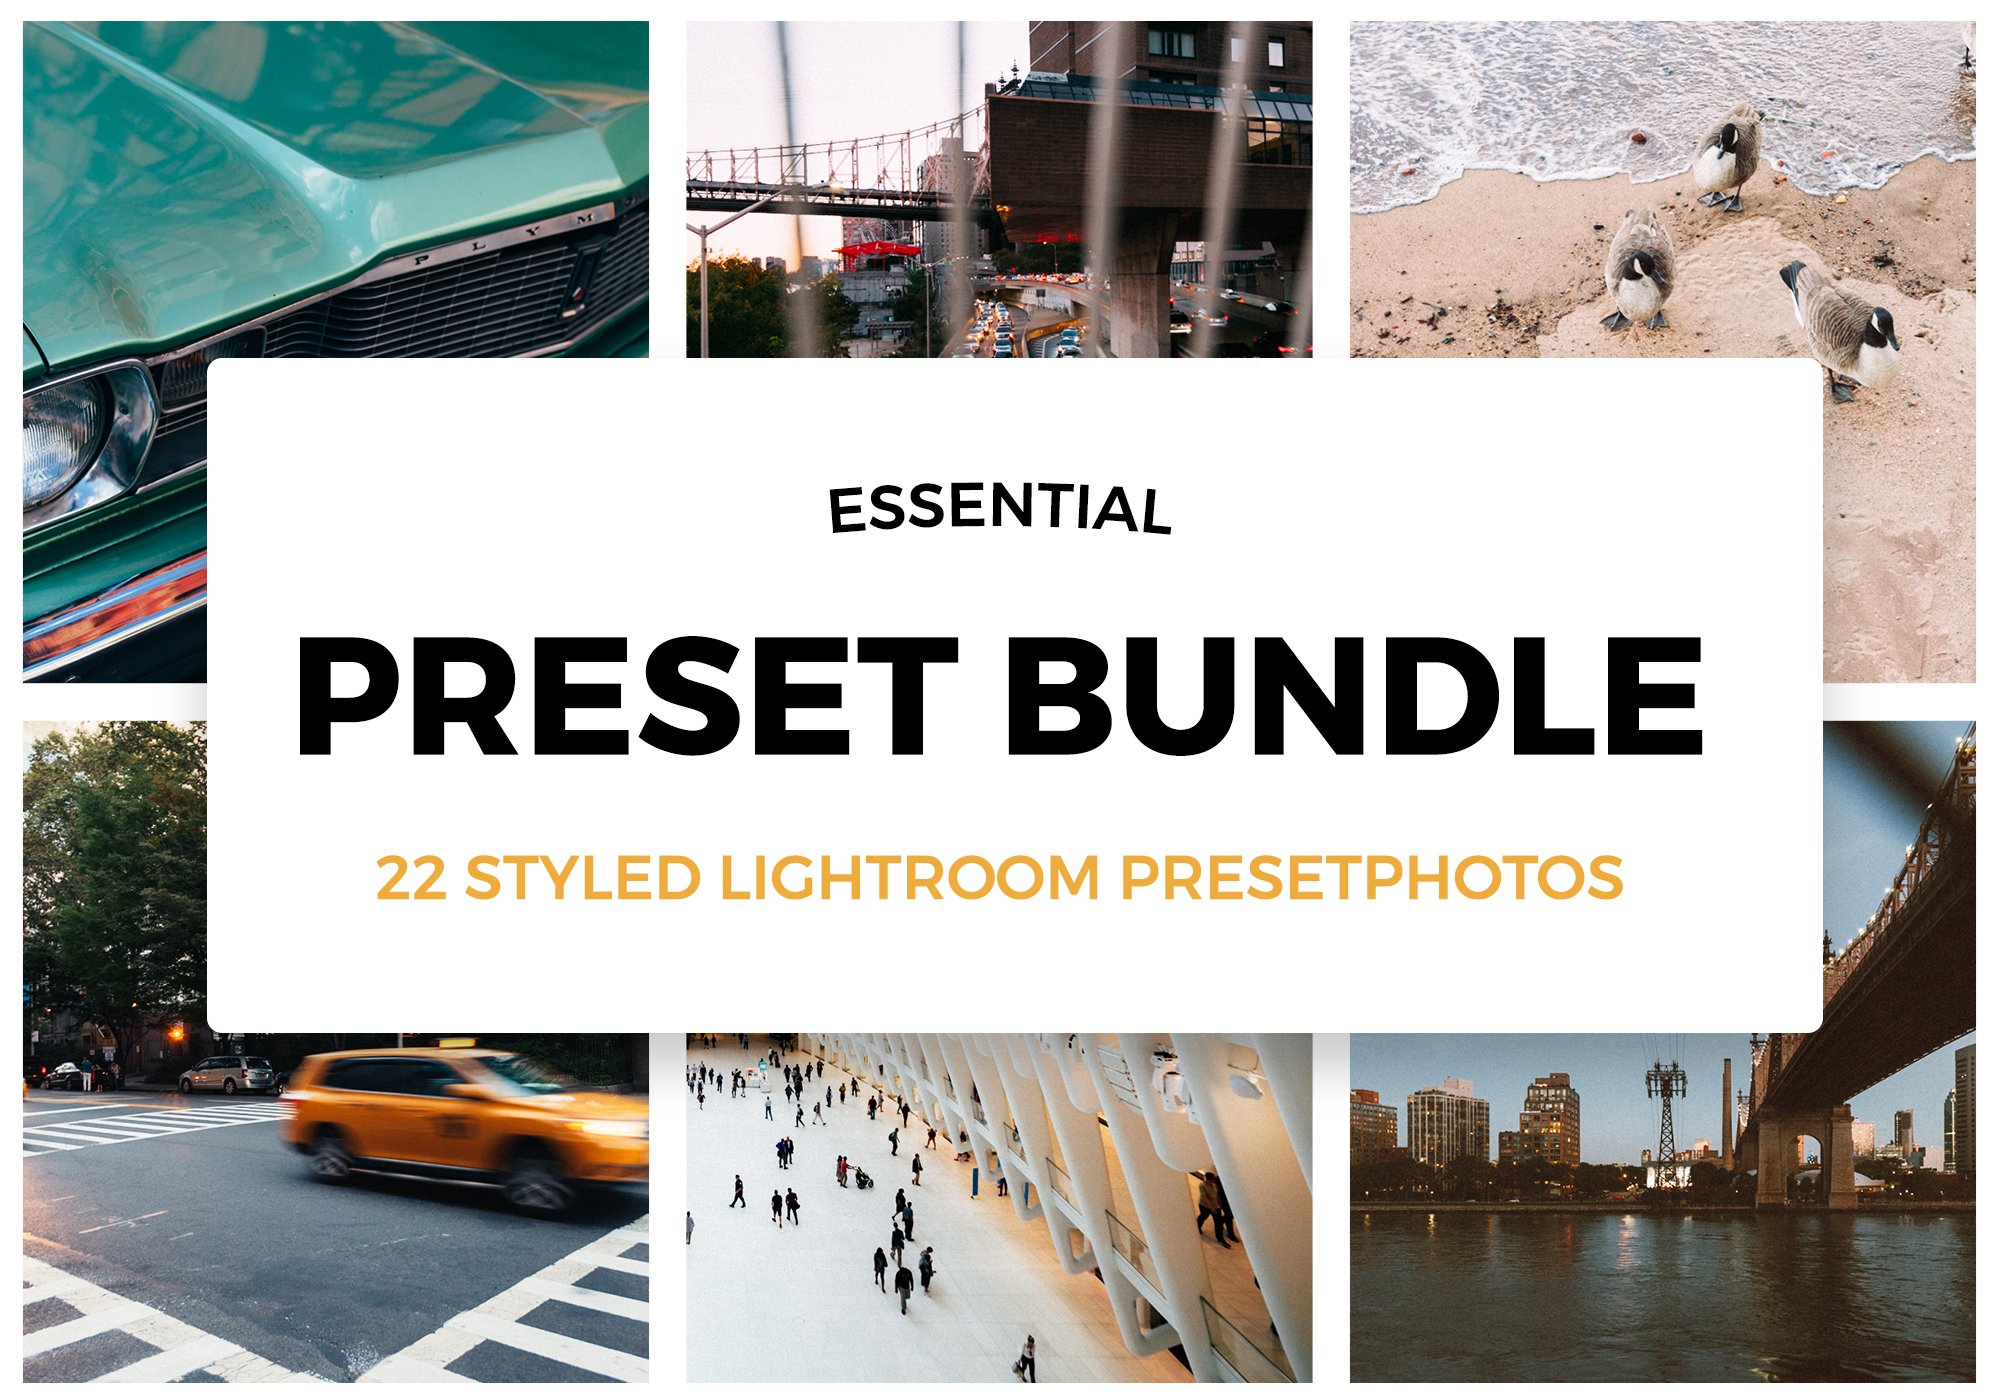 The Best&Essential Preset Lightroomcover image.